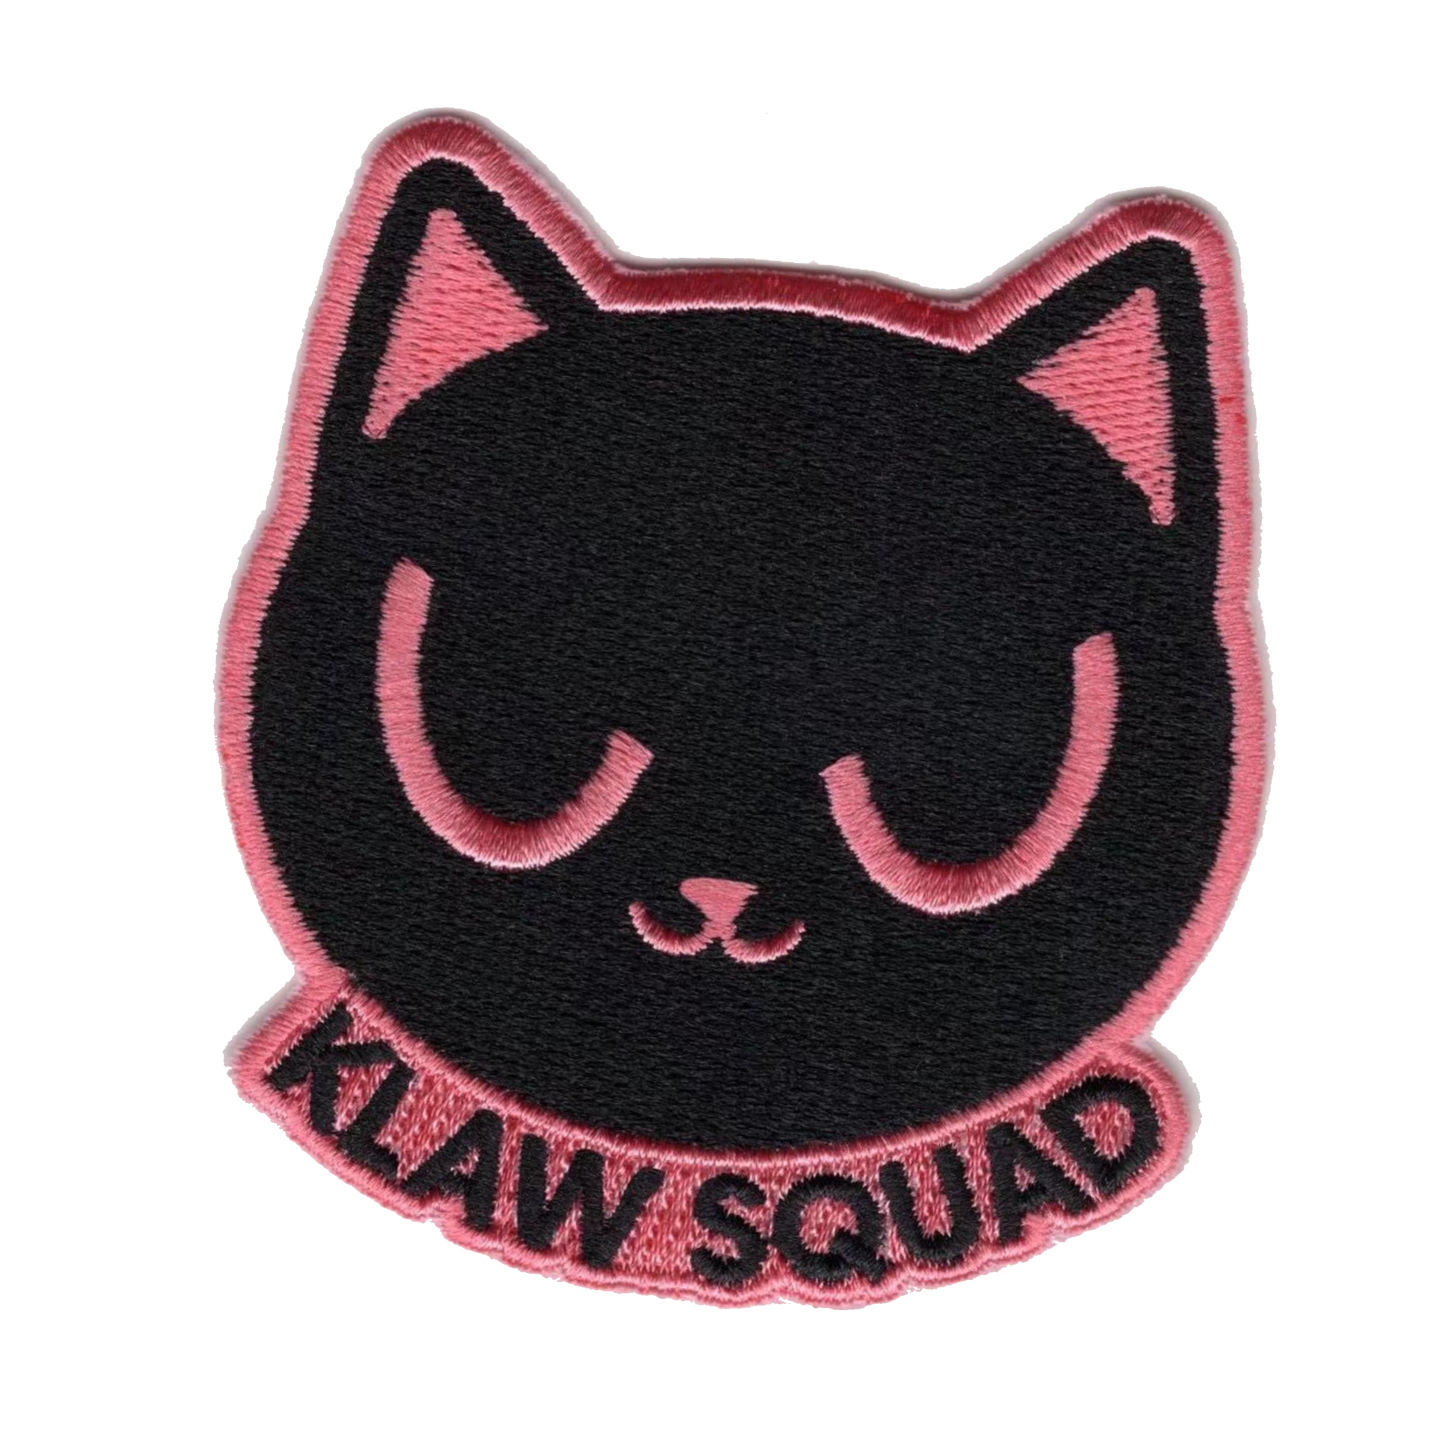 Kota Kotonya - Klaw Squad Patches